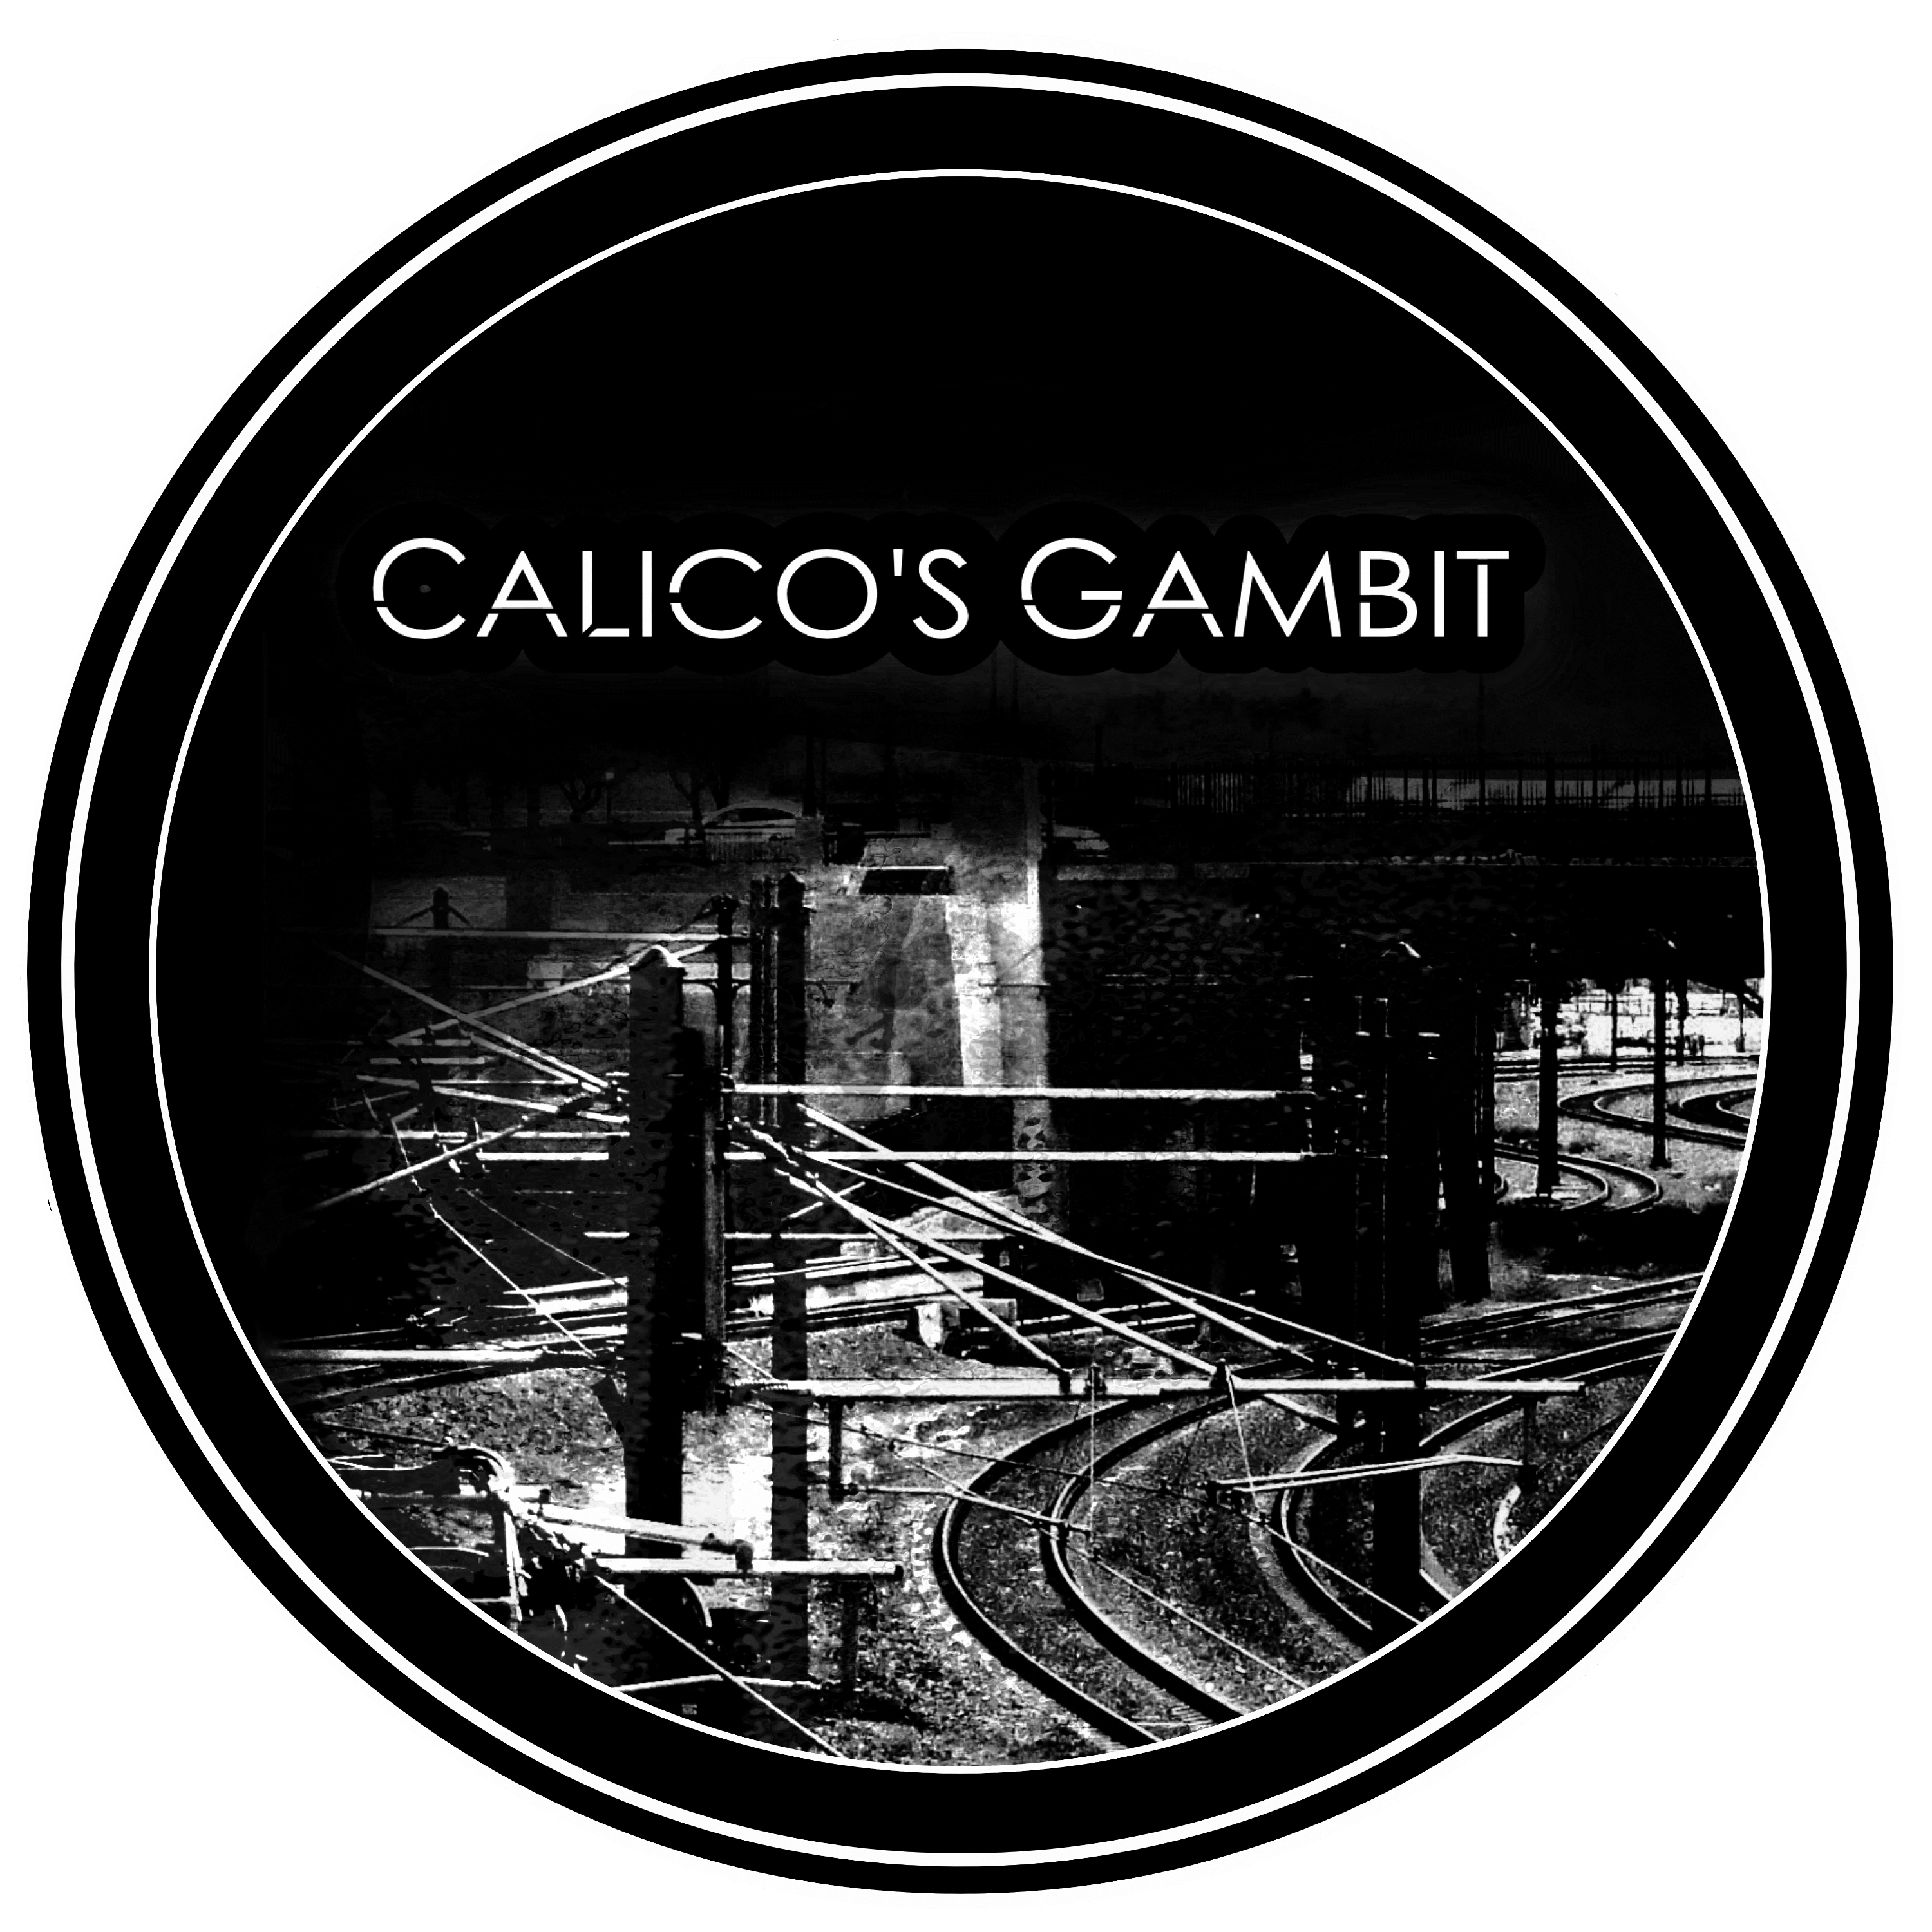 Calico's Gambit